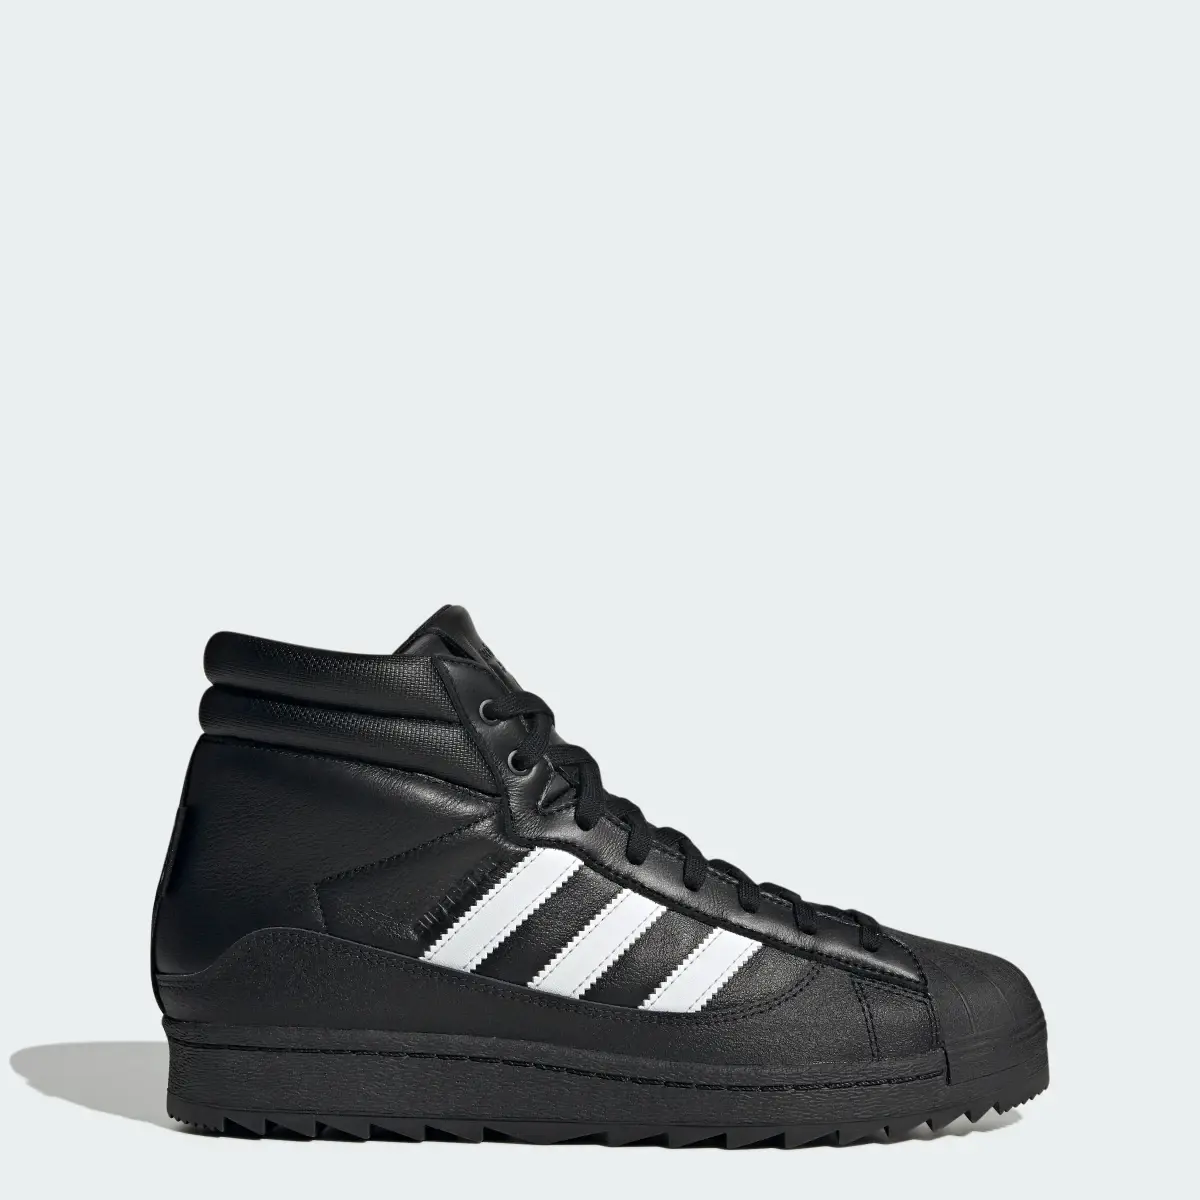 Adidas Superstar GORE-TEX Winter Boots. 1